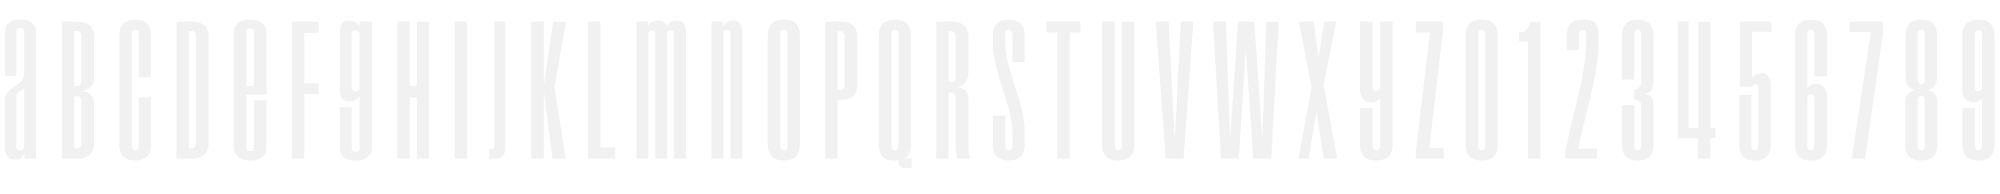 Droid Typeface